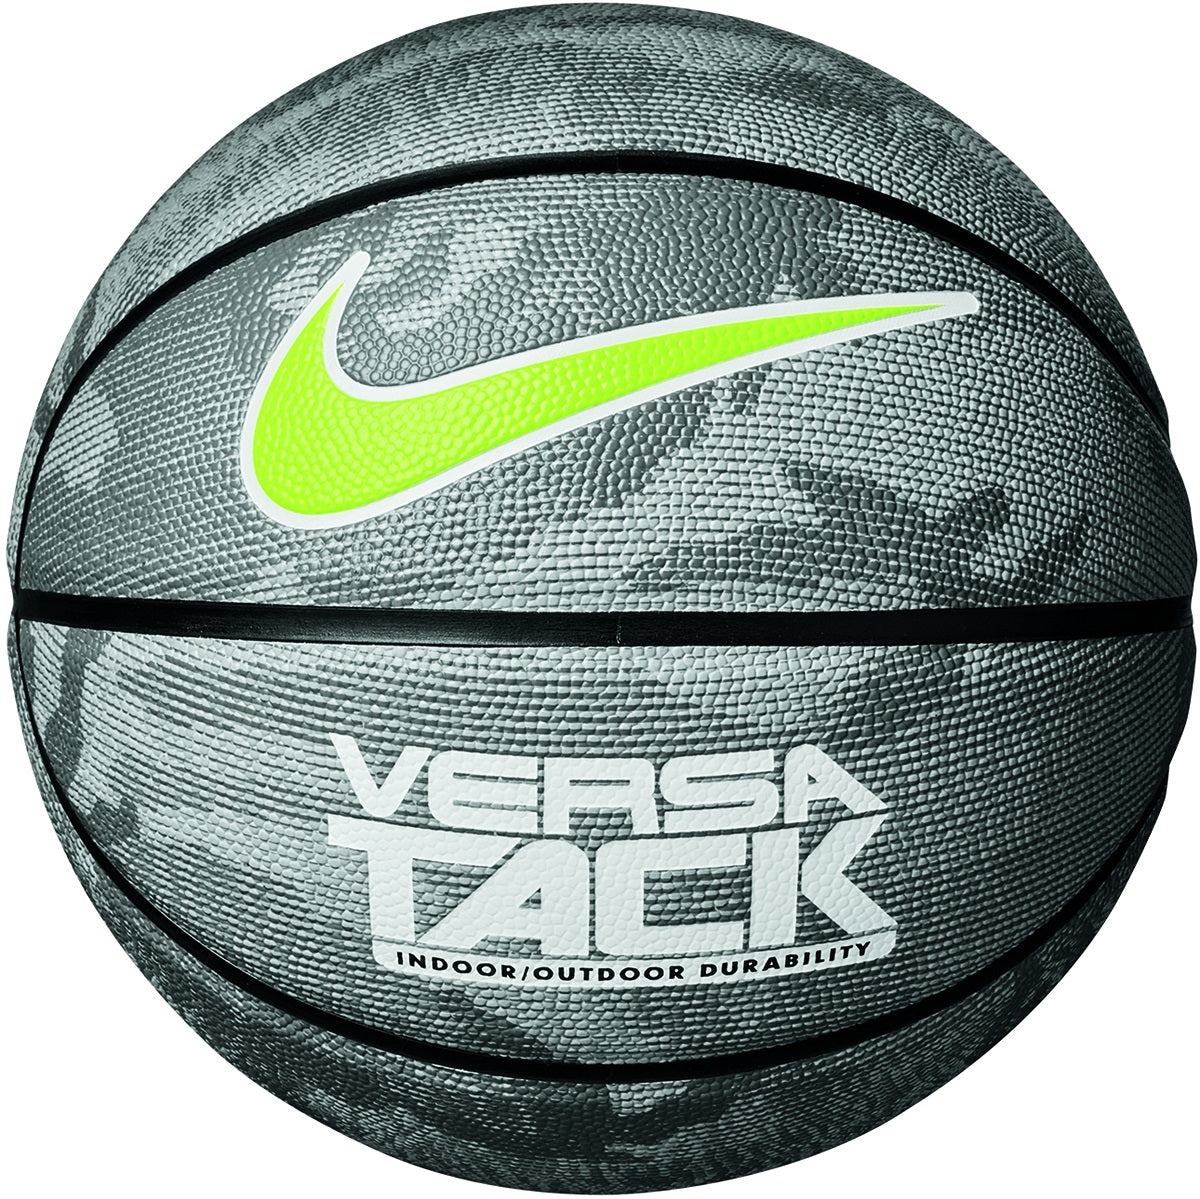 Nike Versa Tack Basketball Size 7 'Grey 